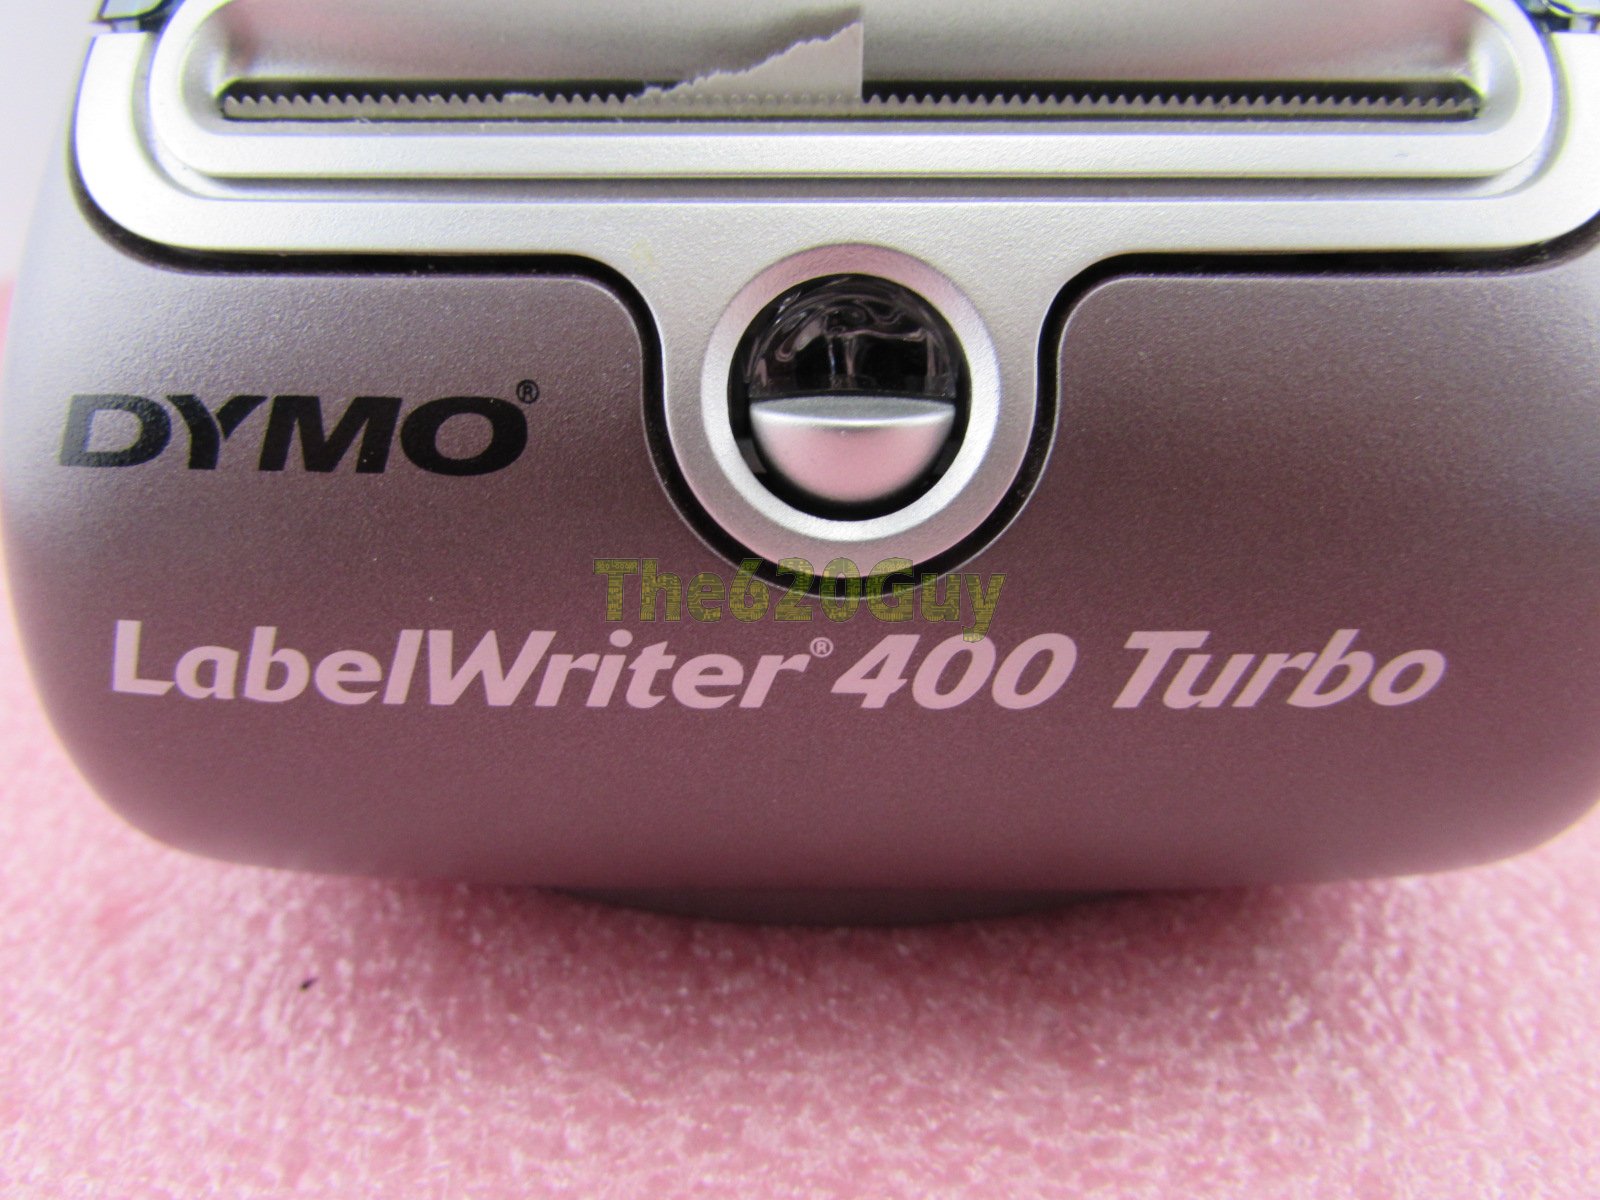 dymo labelwriter 400 driver win 10